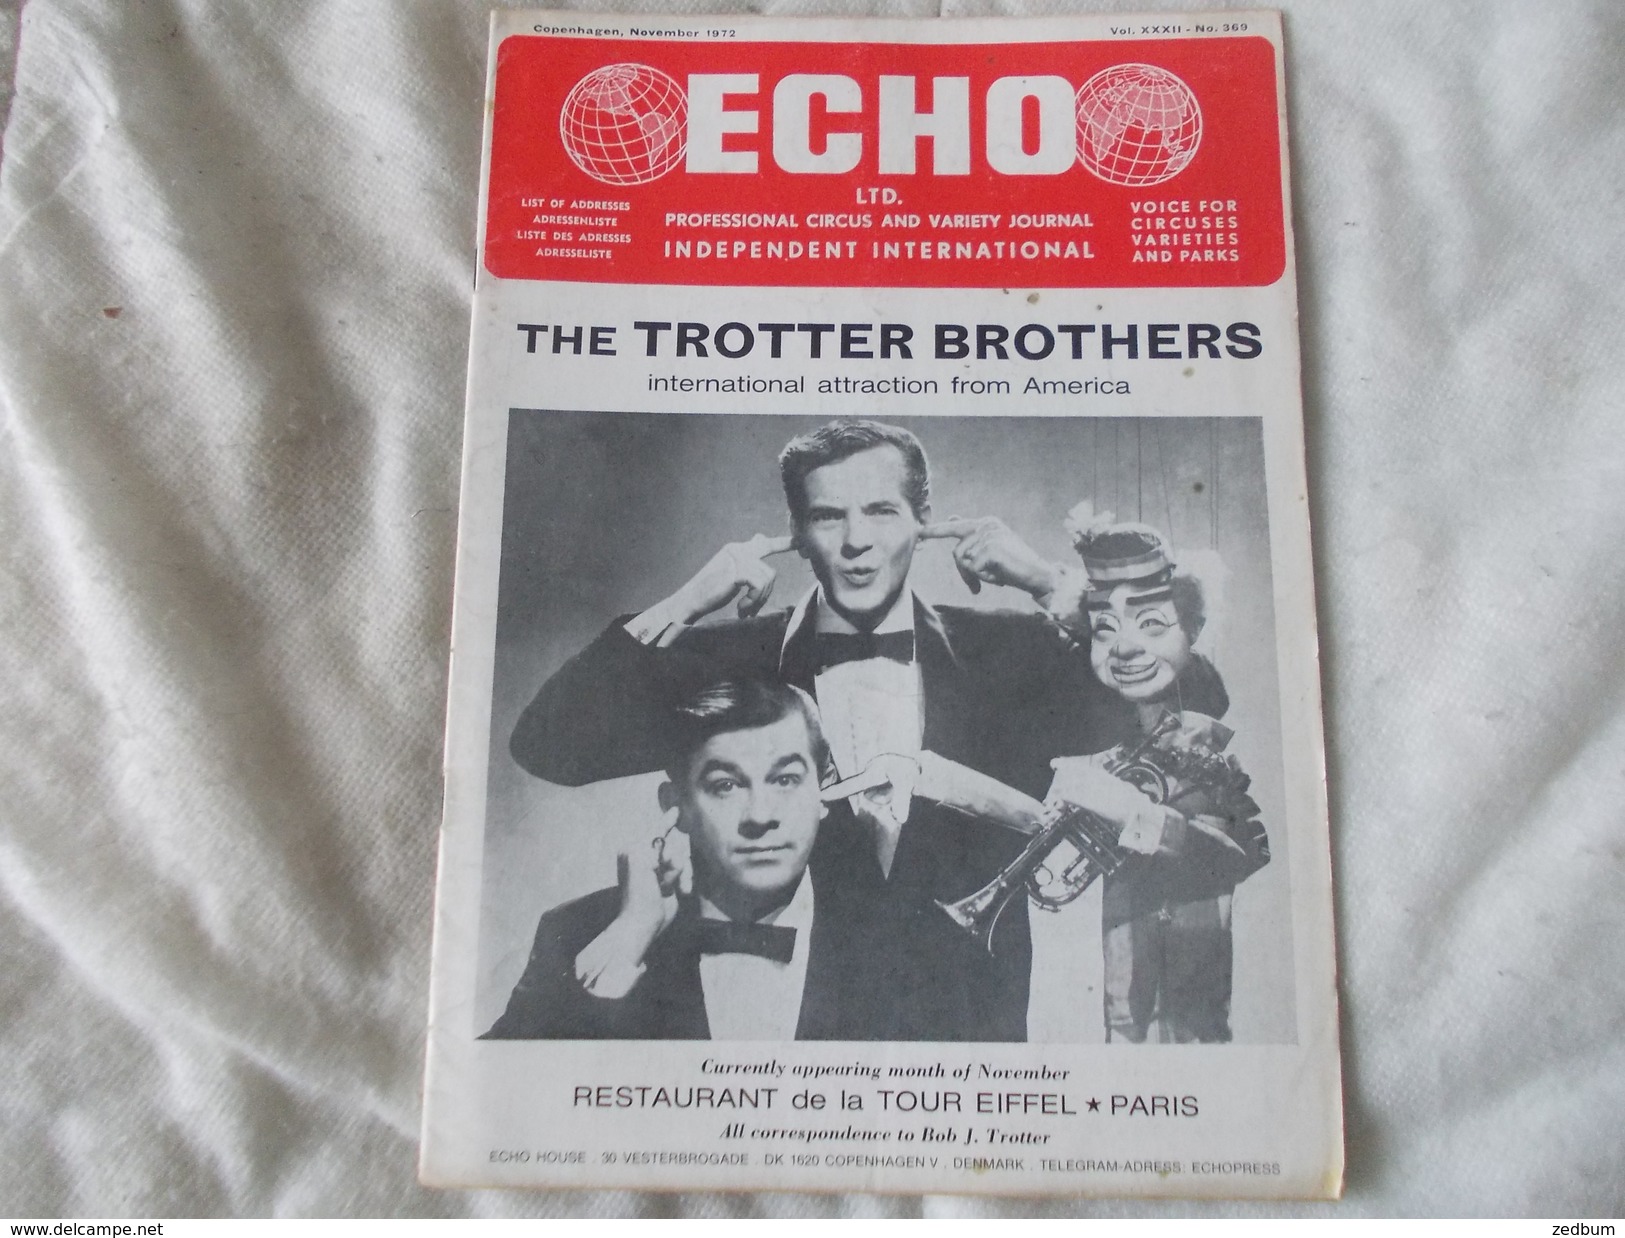 ECHO LTD Professional Circus And Variety Journal Independent International N° 369 November 1972 - Unterhaltung